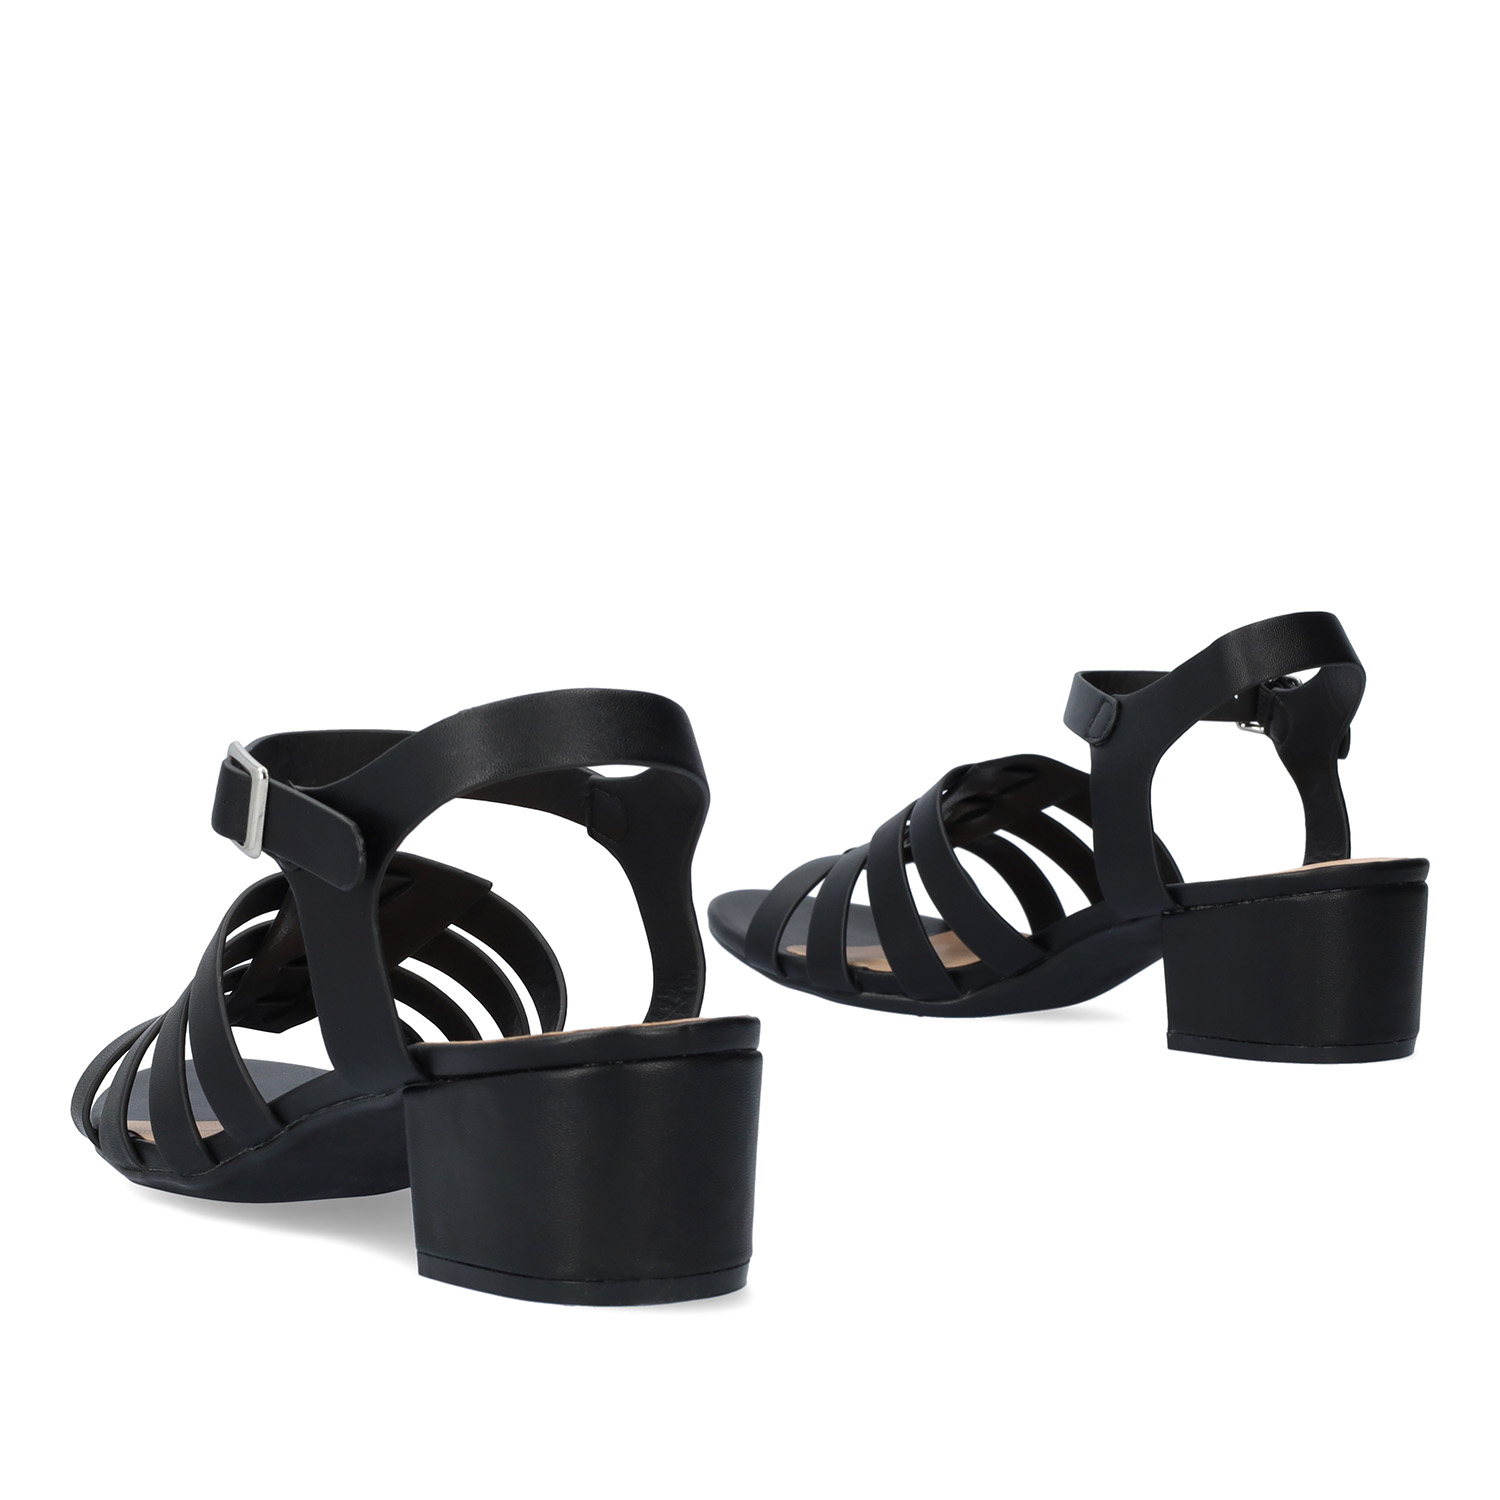 Squared heel sandal in black soft material 